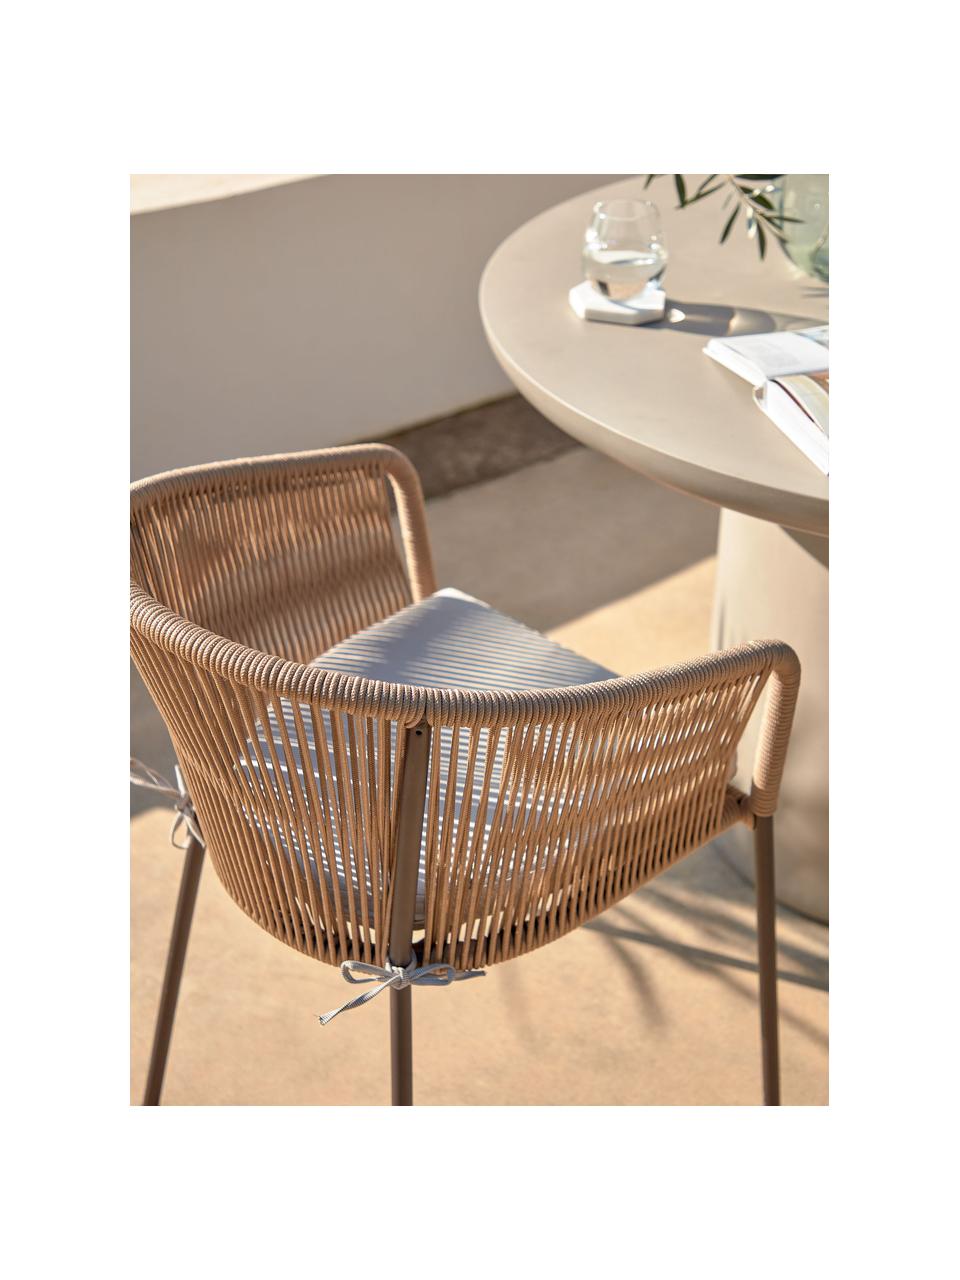 Chaise de jardin Yanet, Brun clair, tissu taupe, larg. 56 x prof. 55 cm